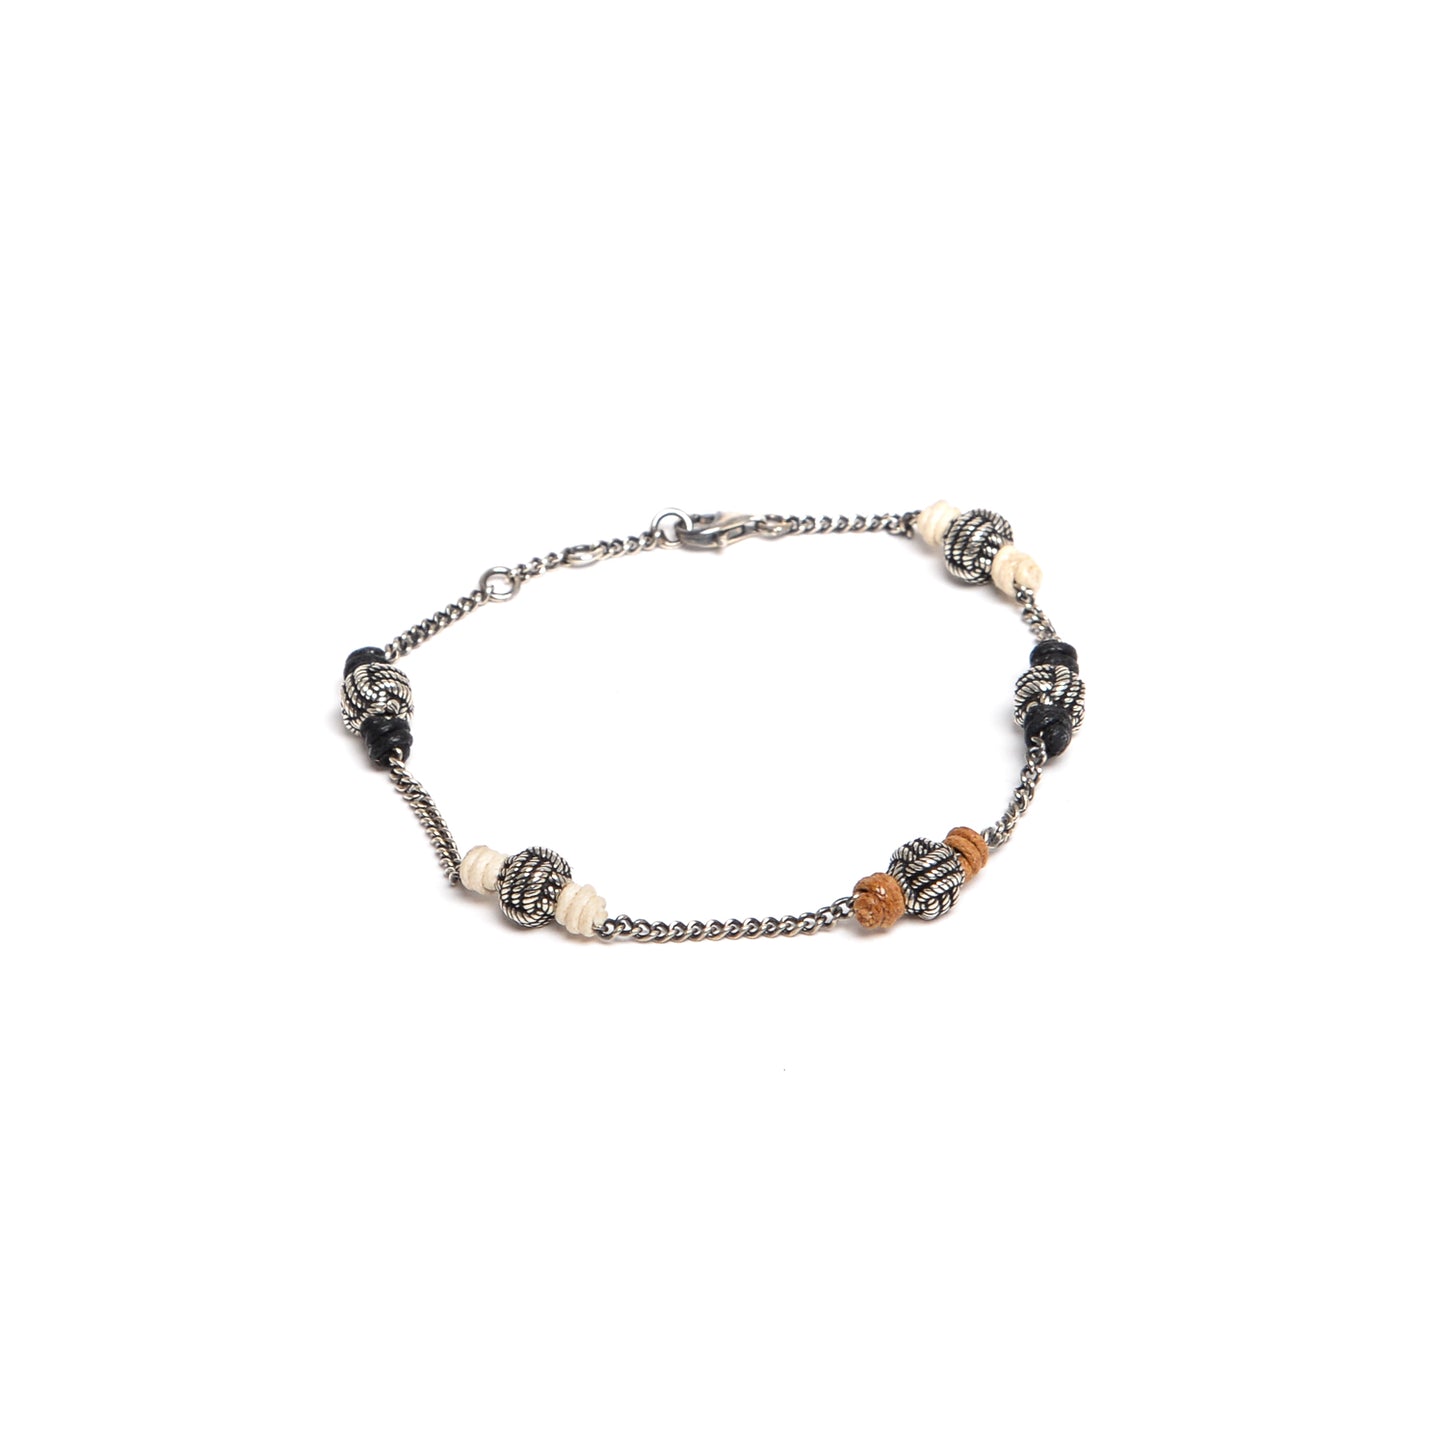 Chain Bracelet + Silver Knot Balls + Waxed Thread